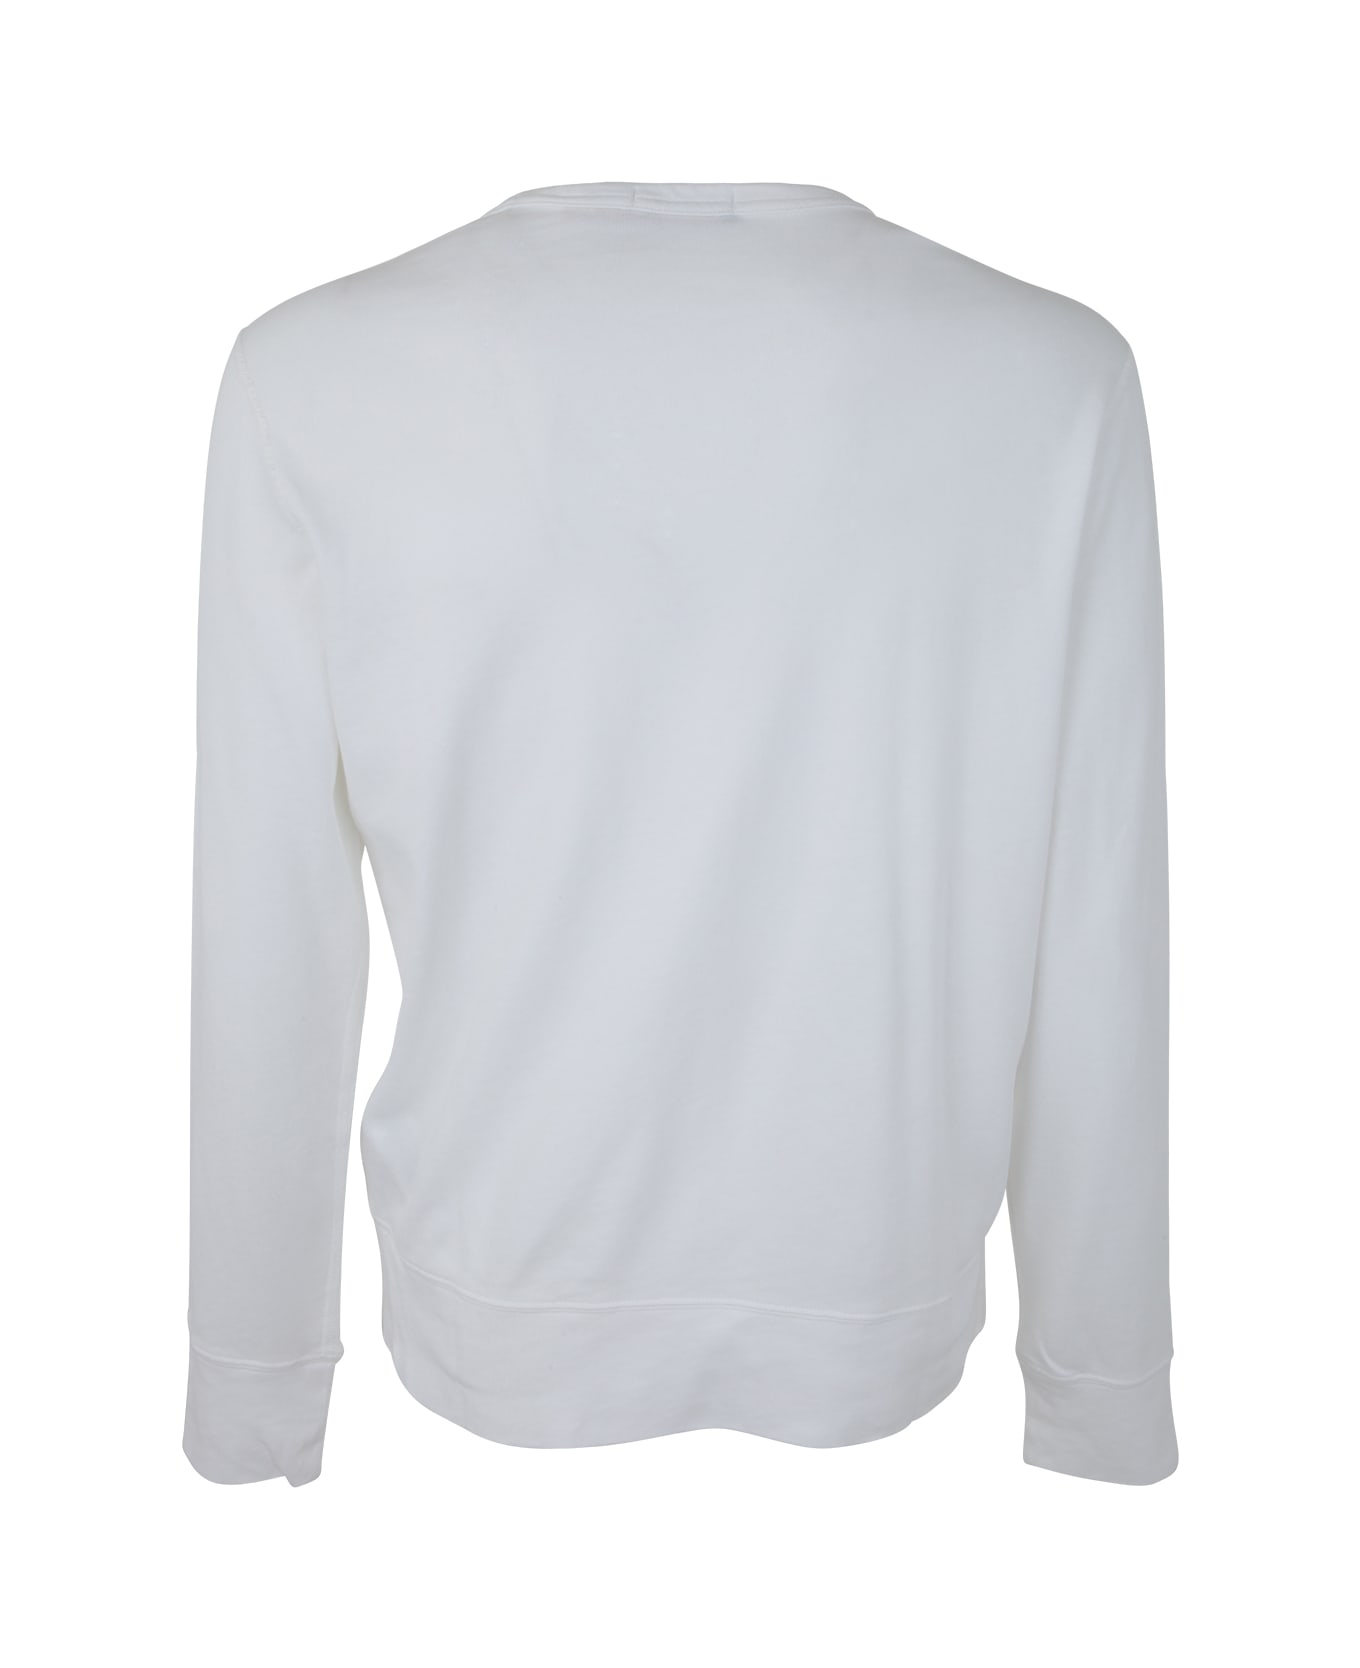 Polo Ralph Lauren Lscnm13 Long Sleeve Sweatshirt - White フリース